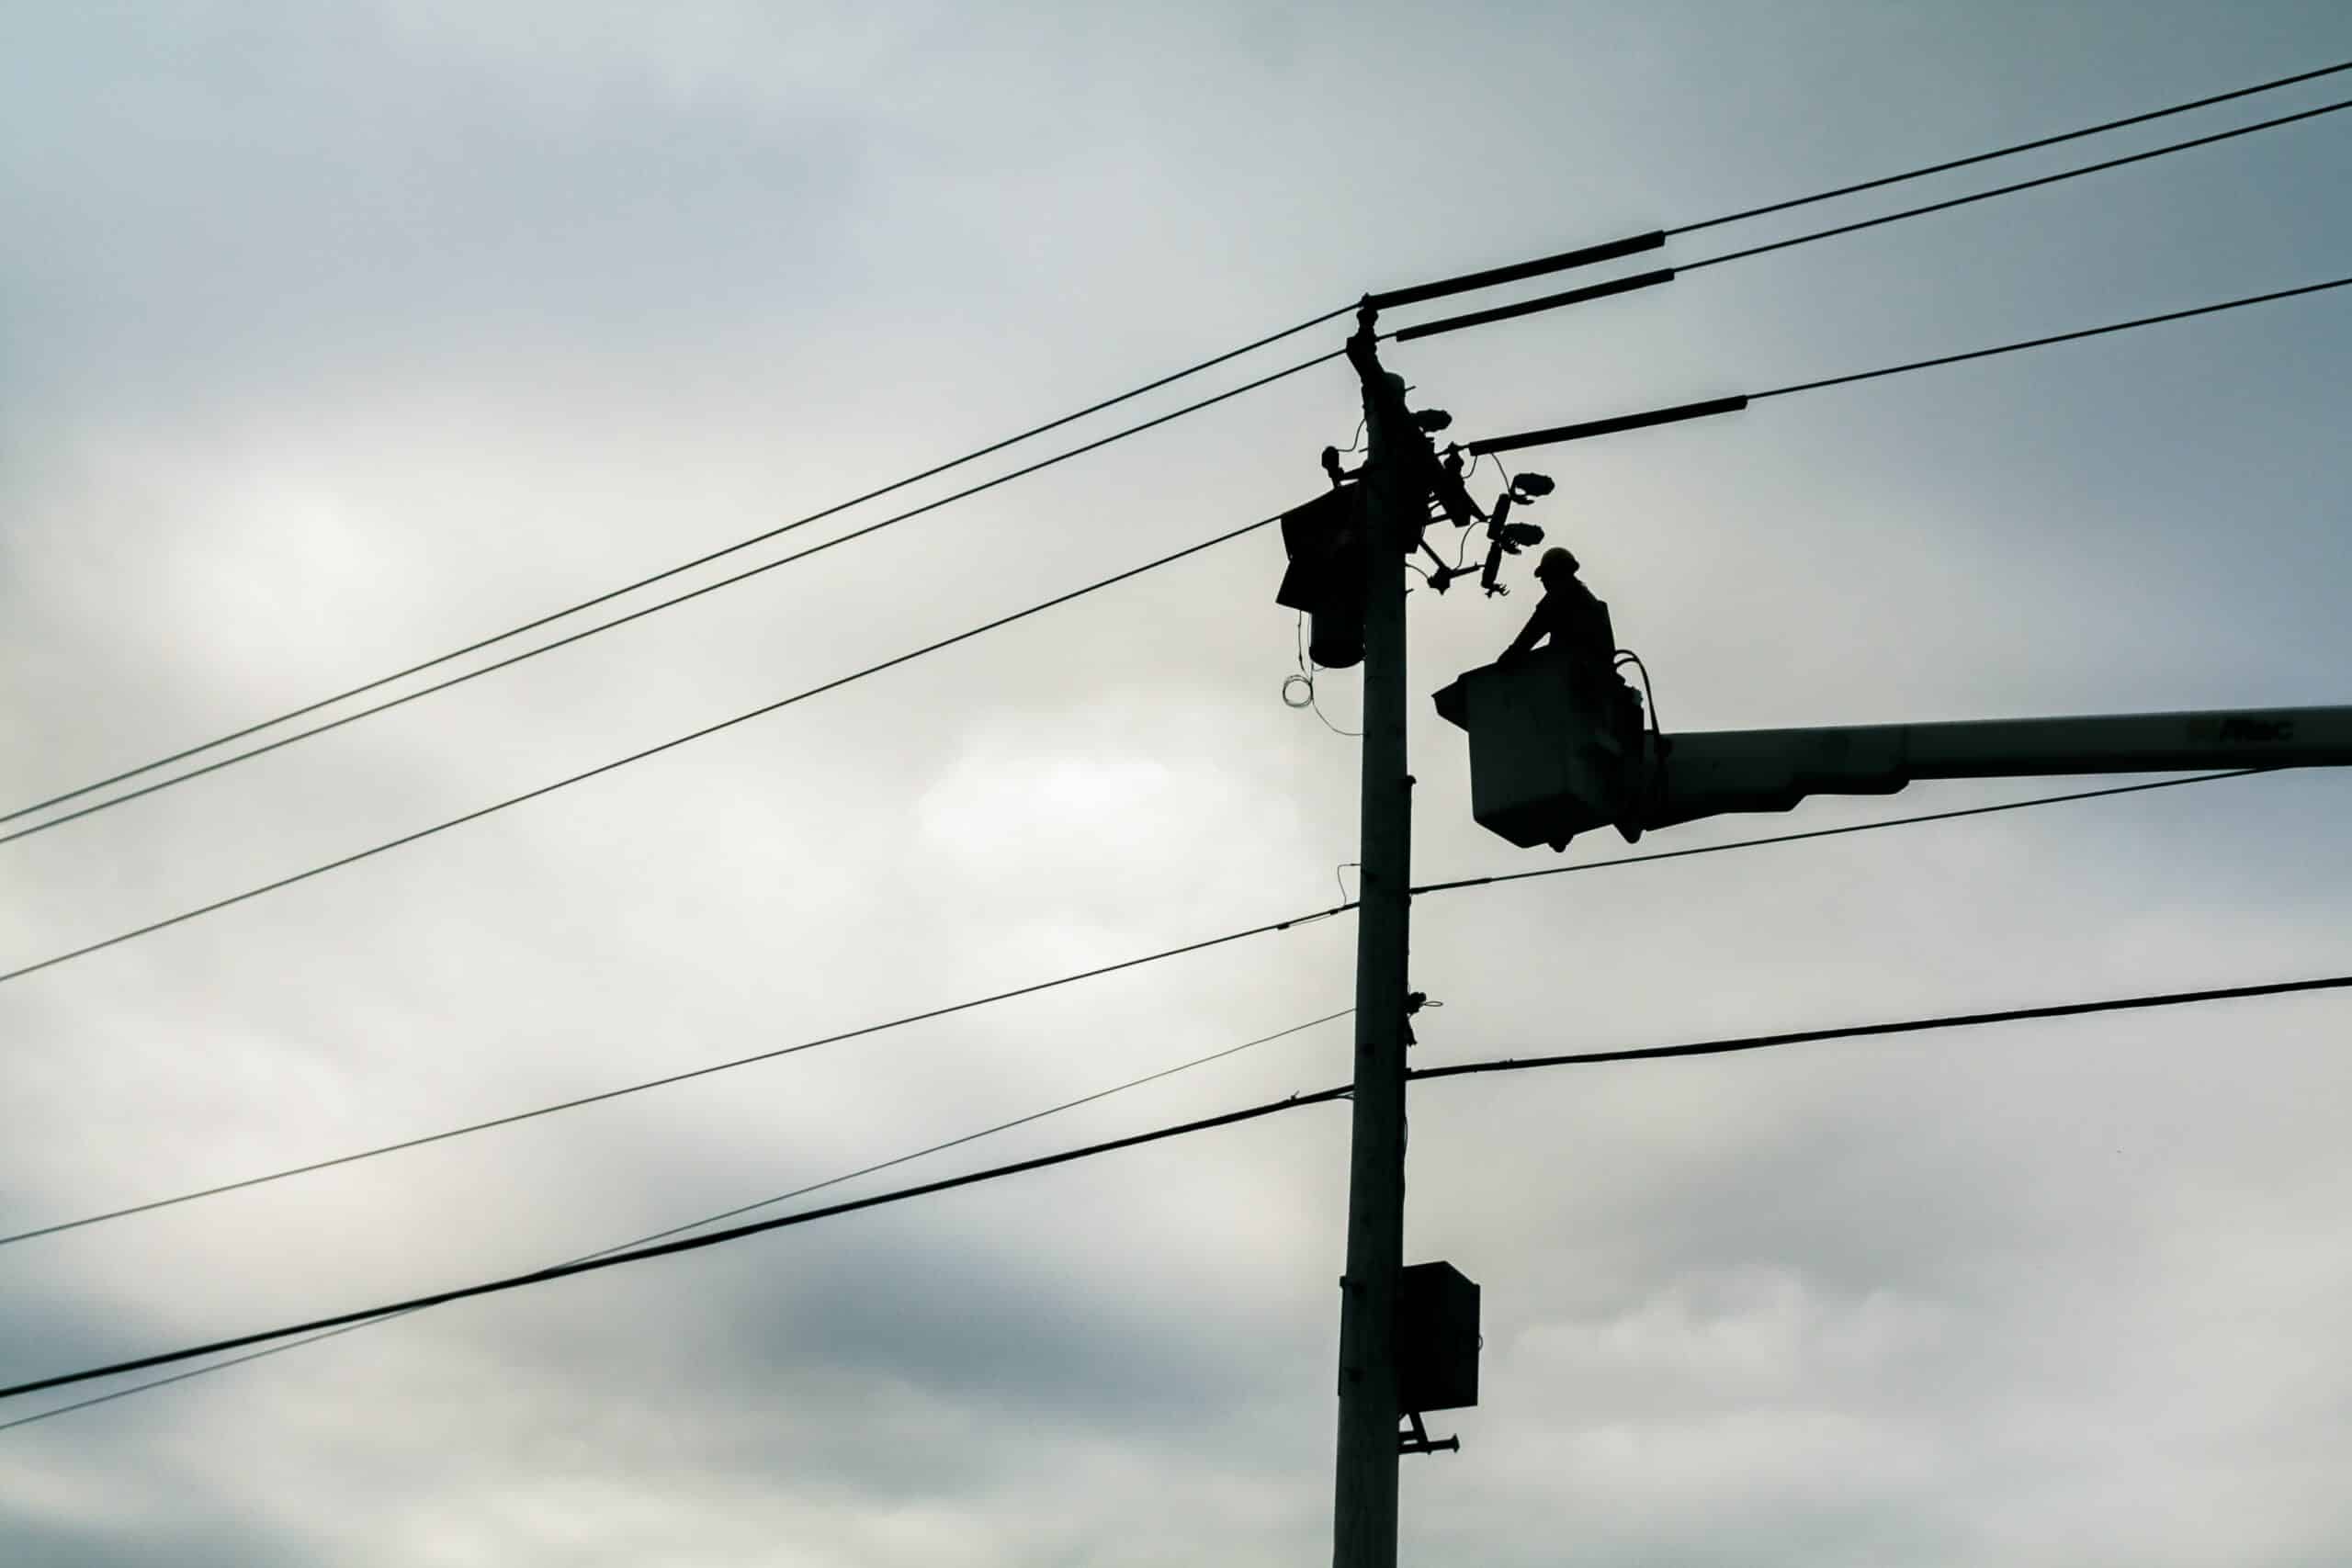 Workers restore power lines